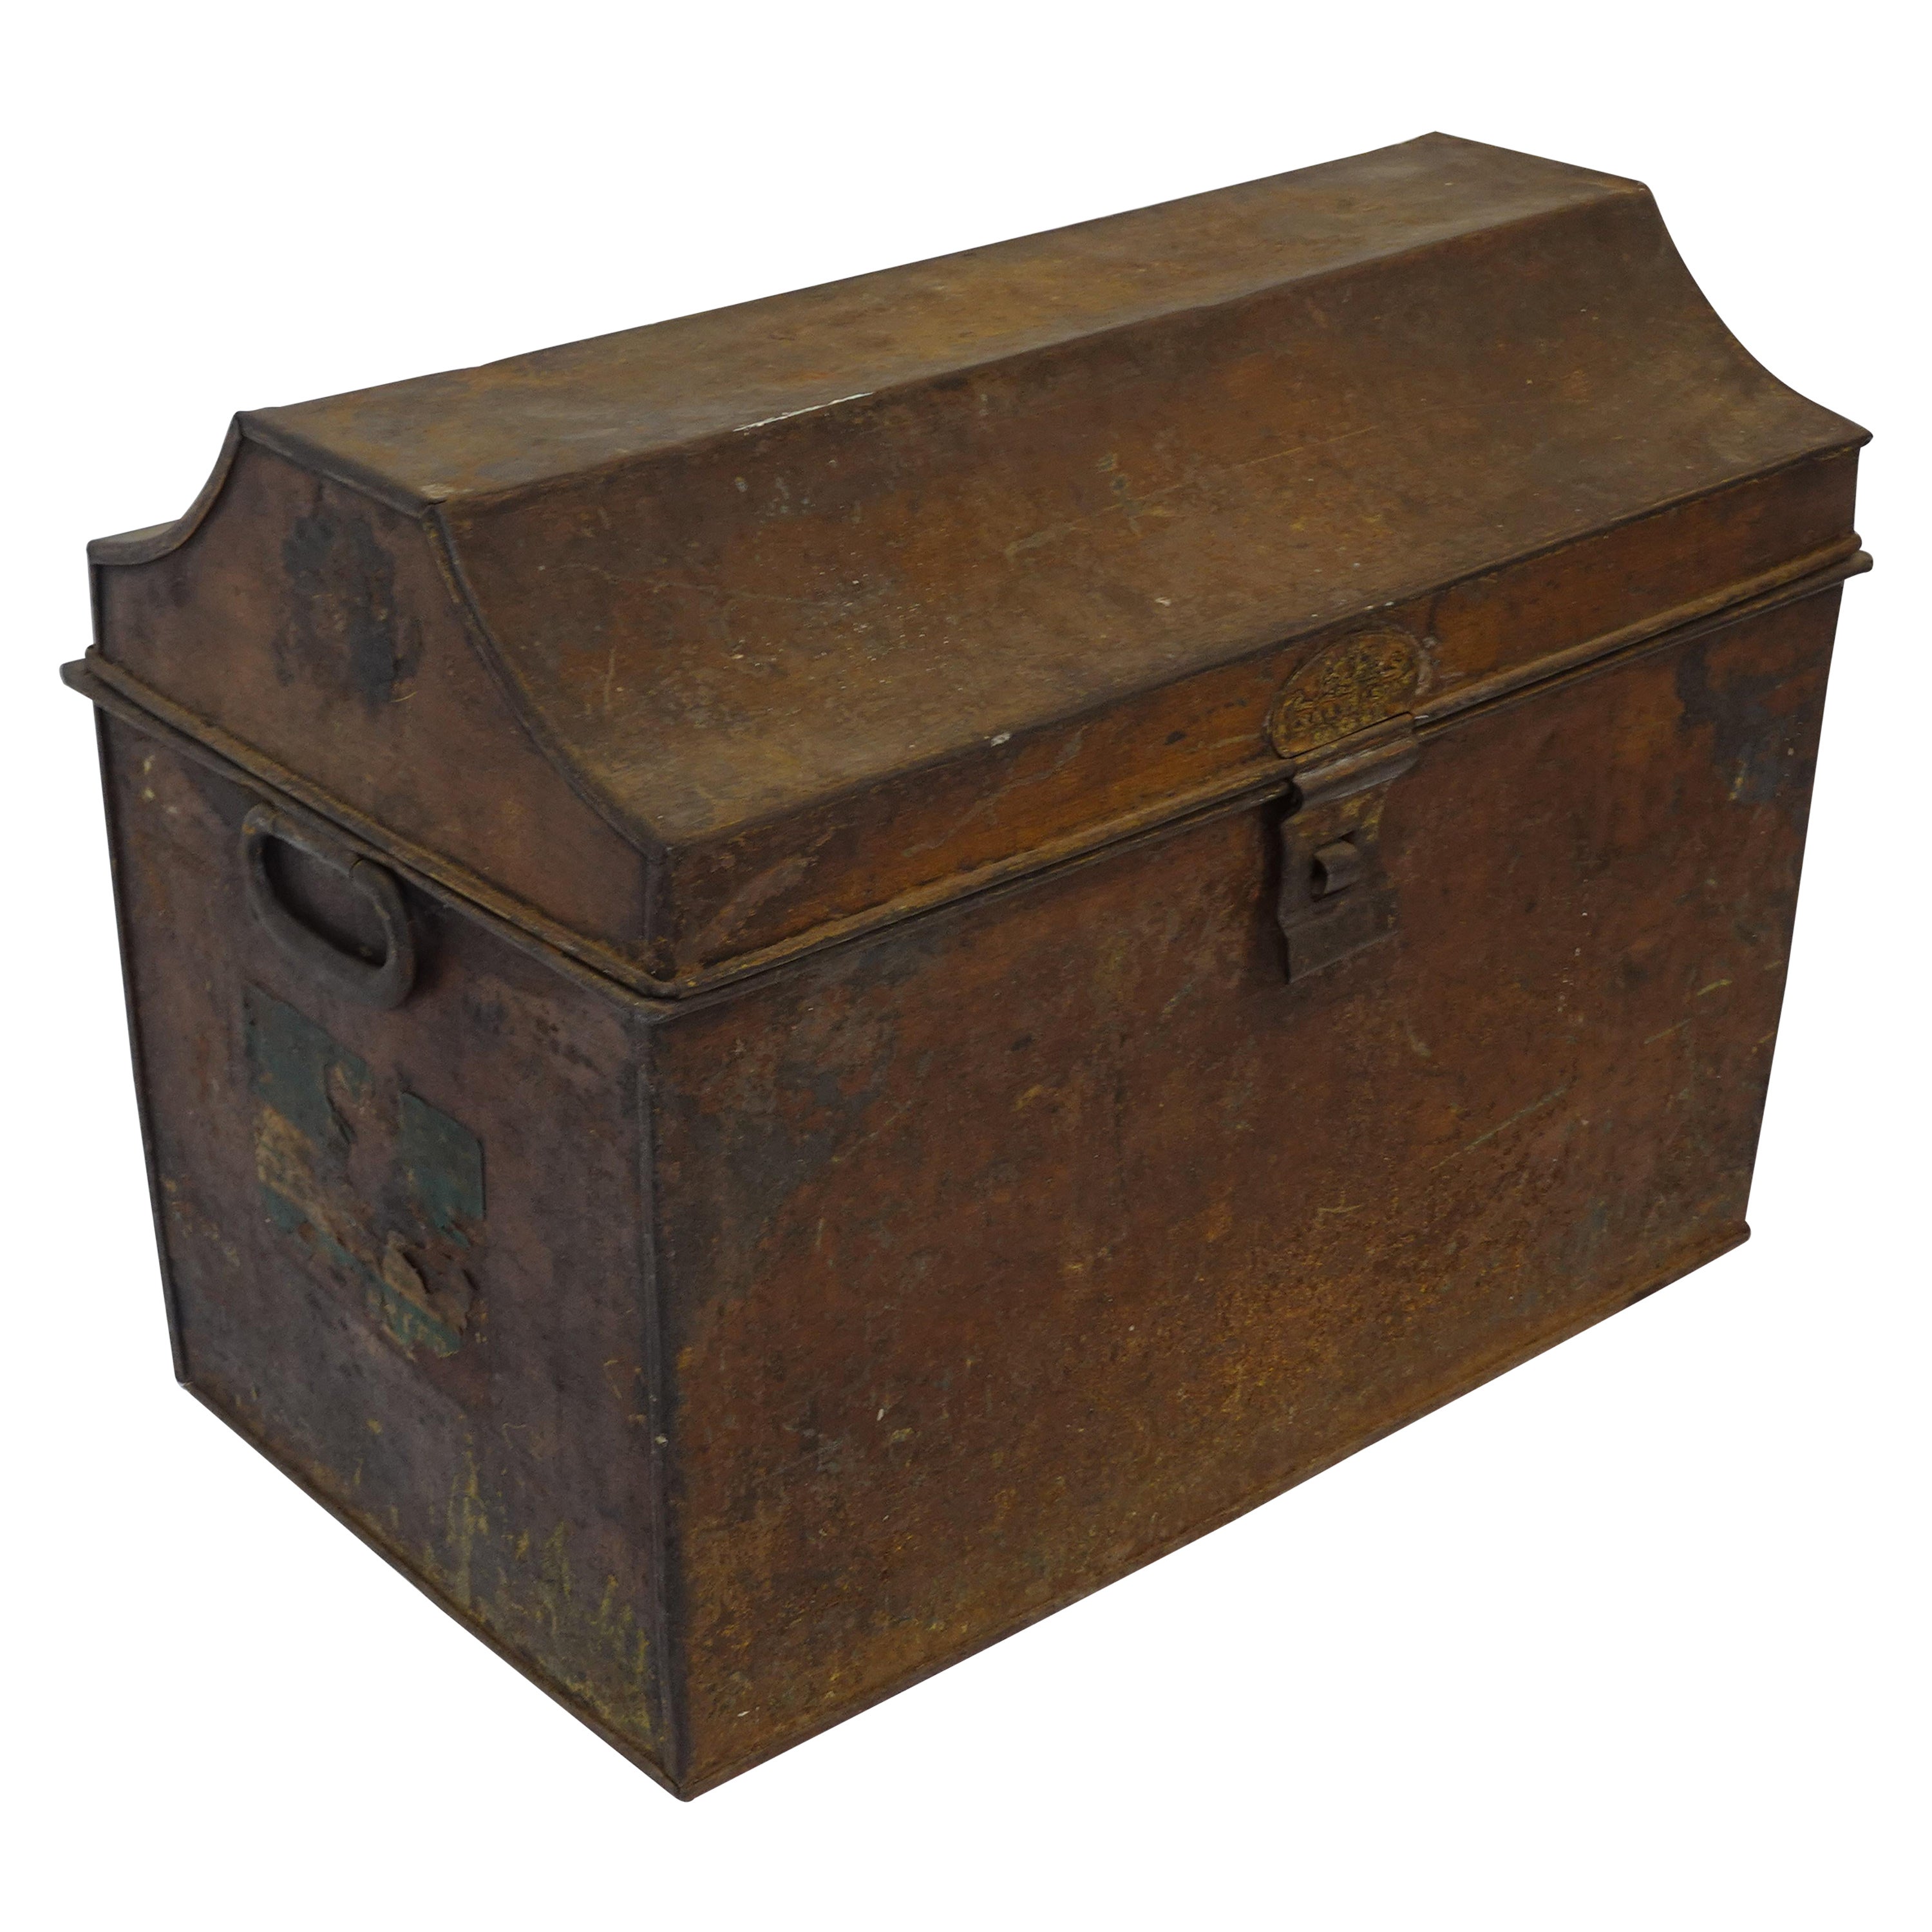 Kirk & Wilson's Royal Mail Box / Trunk  